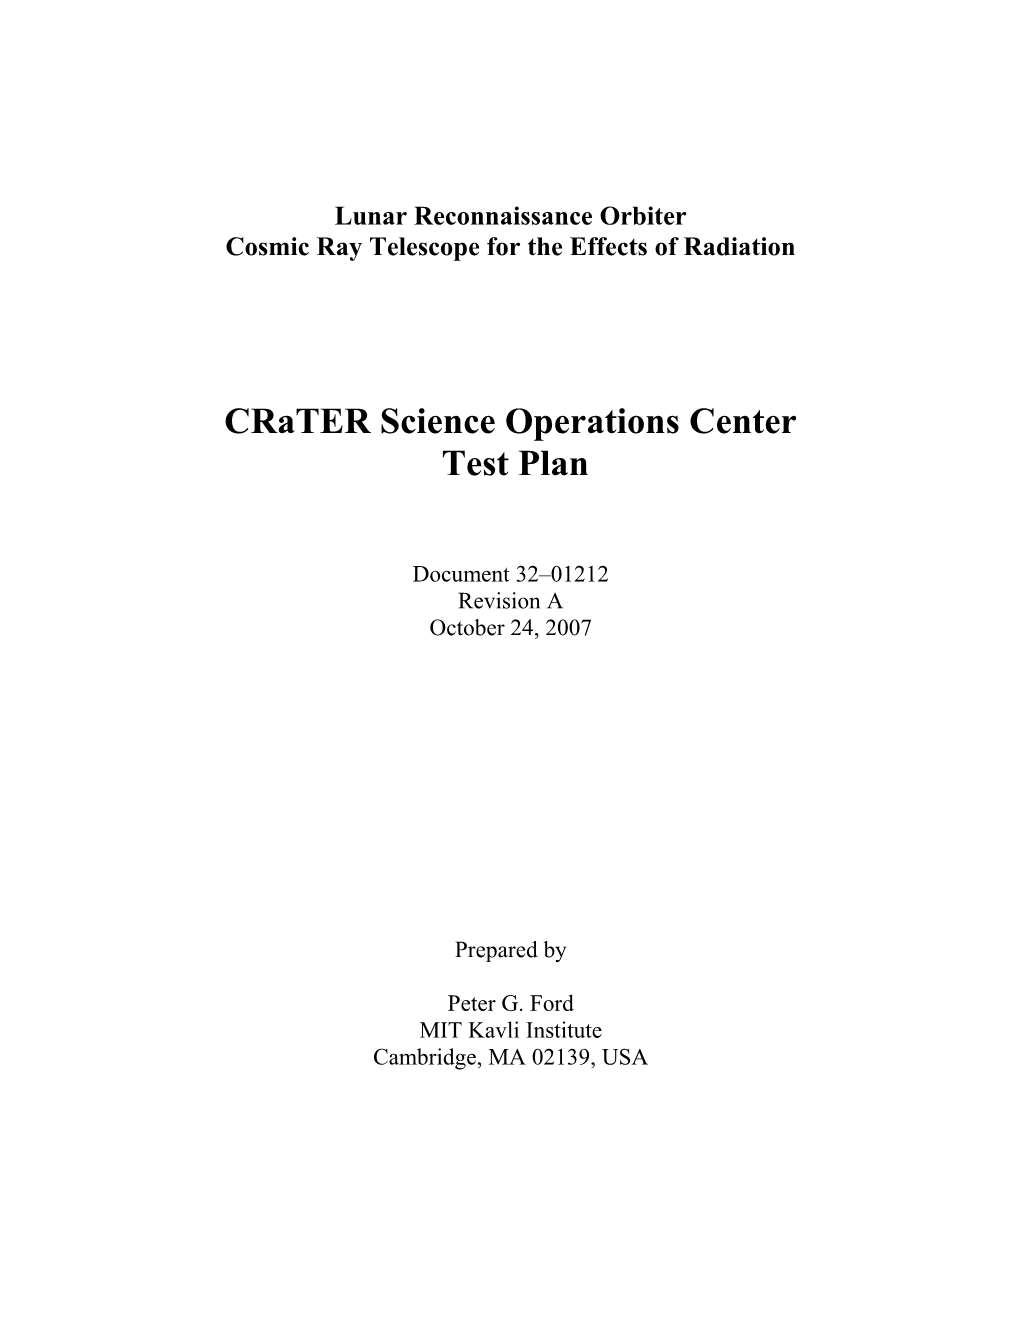 Crater SOC Test Plan